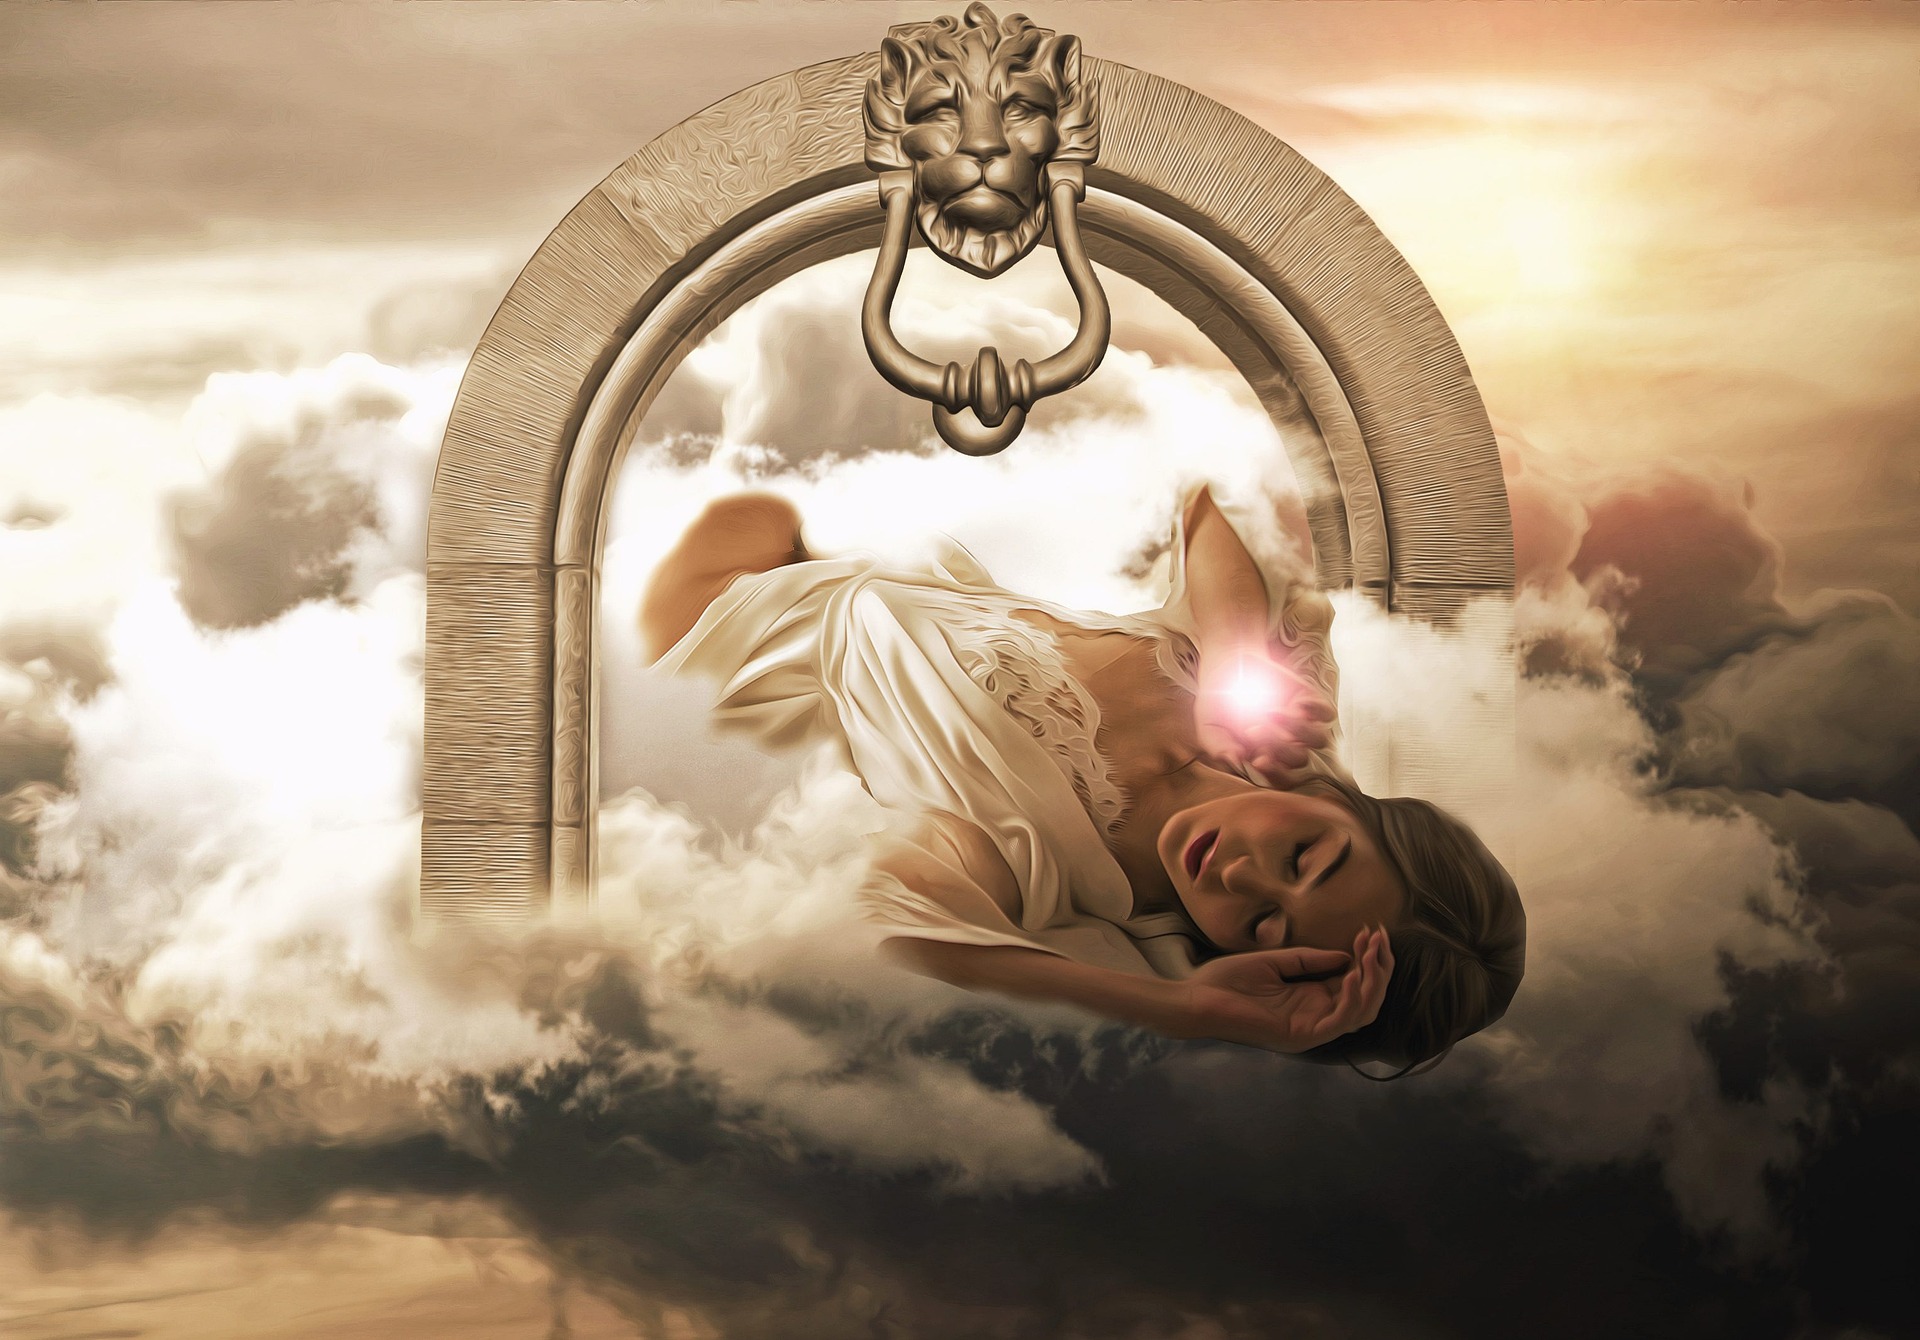 Woman in fantastic dream world, lions head, gate, fantasy, sky, clouds